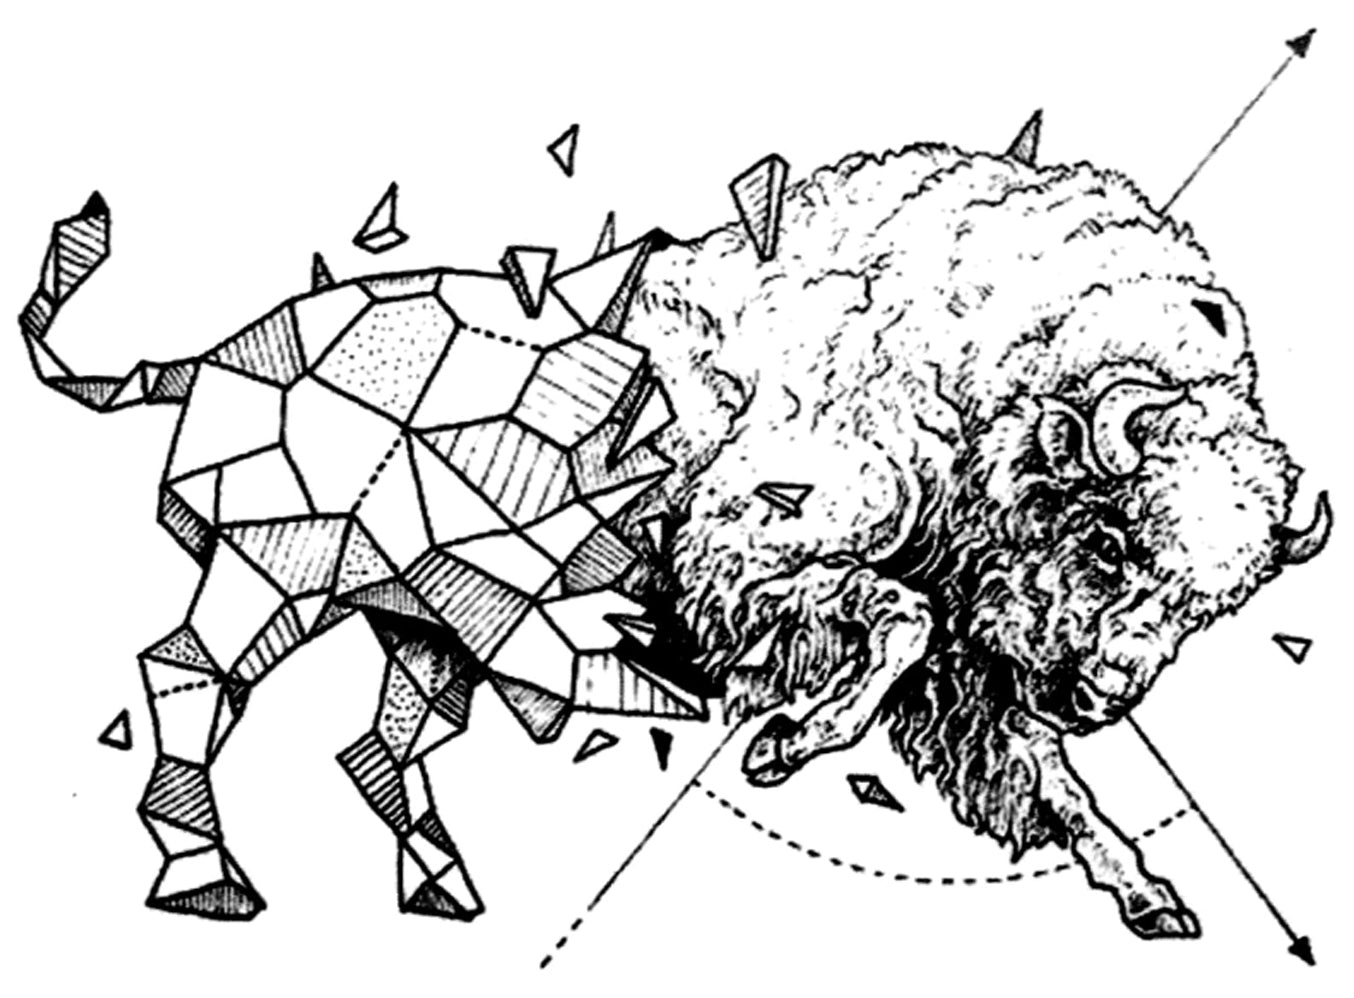 Bull Stock Market Day Trading Investor Taurus Waterproof Temporary Tattoos 2 Sheets